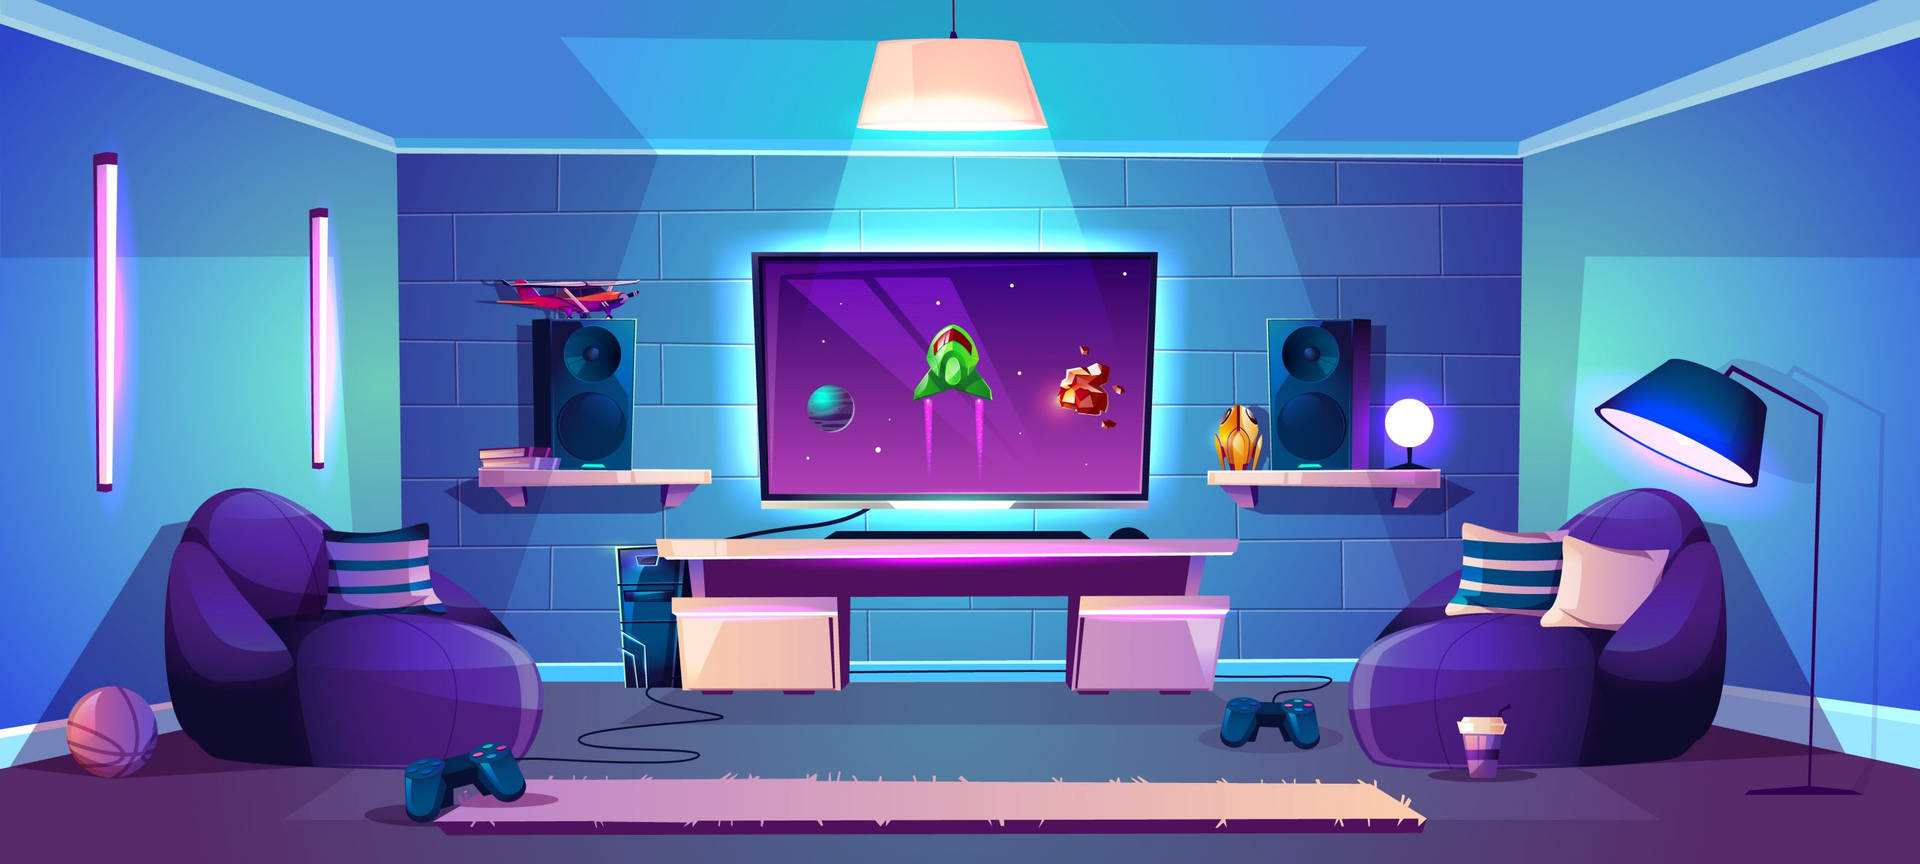 Gaming Room Digital Art Wallpaper